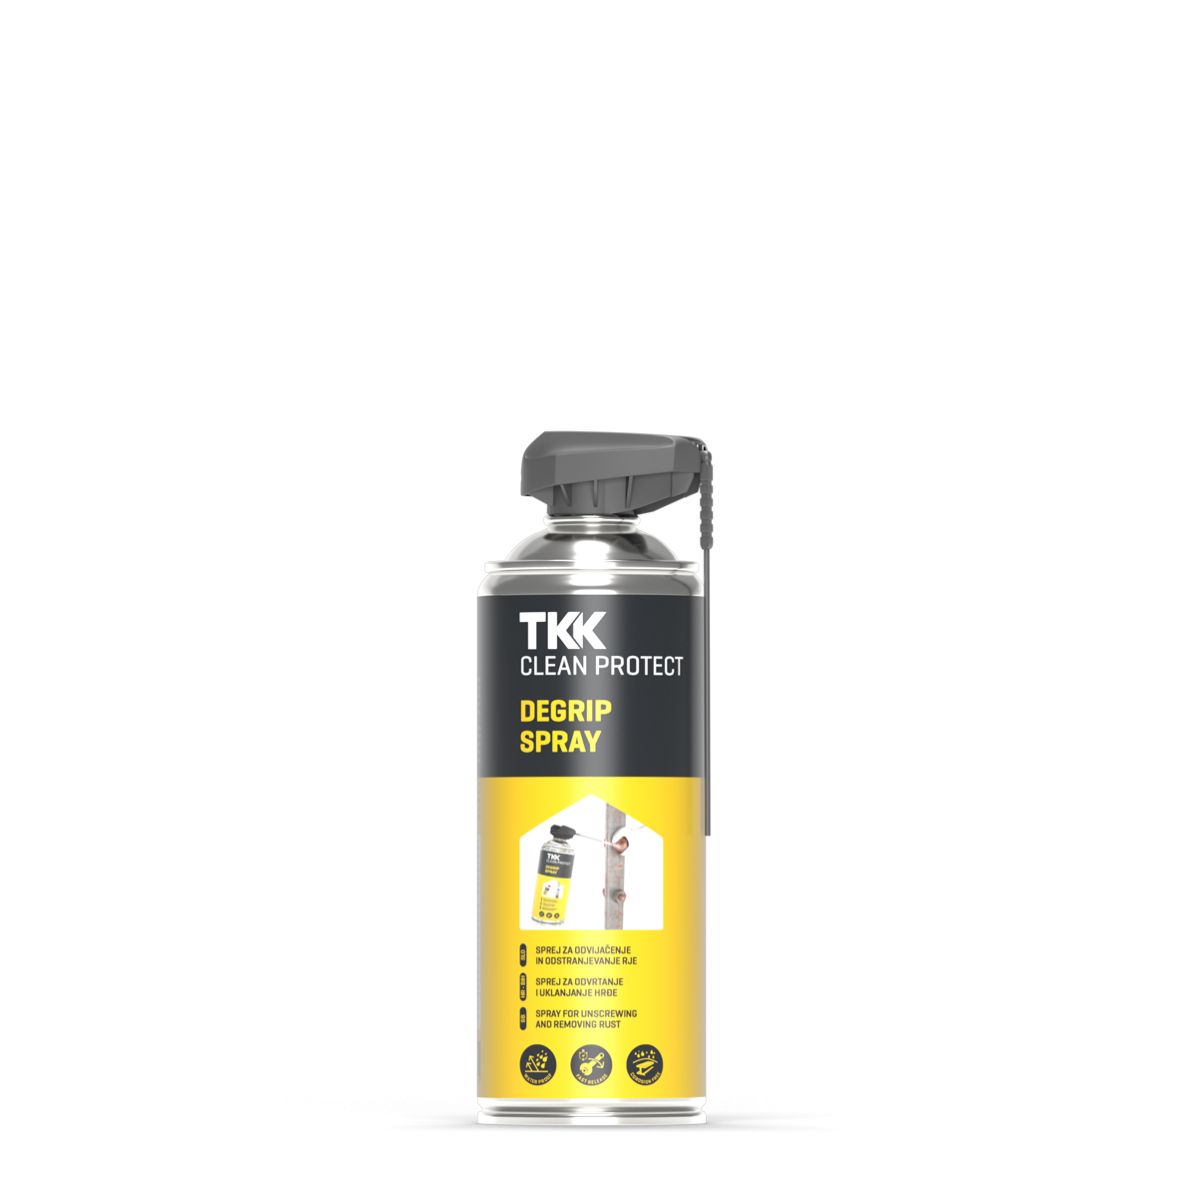 TKK Clean Protect Degrip Spray